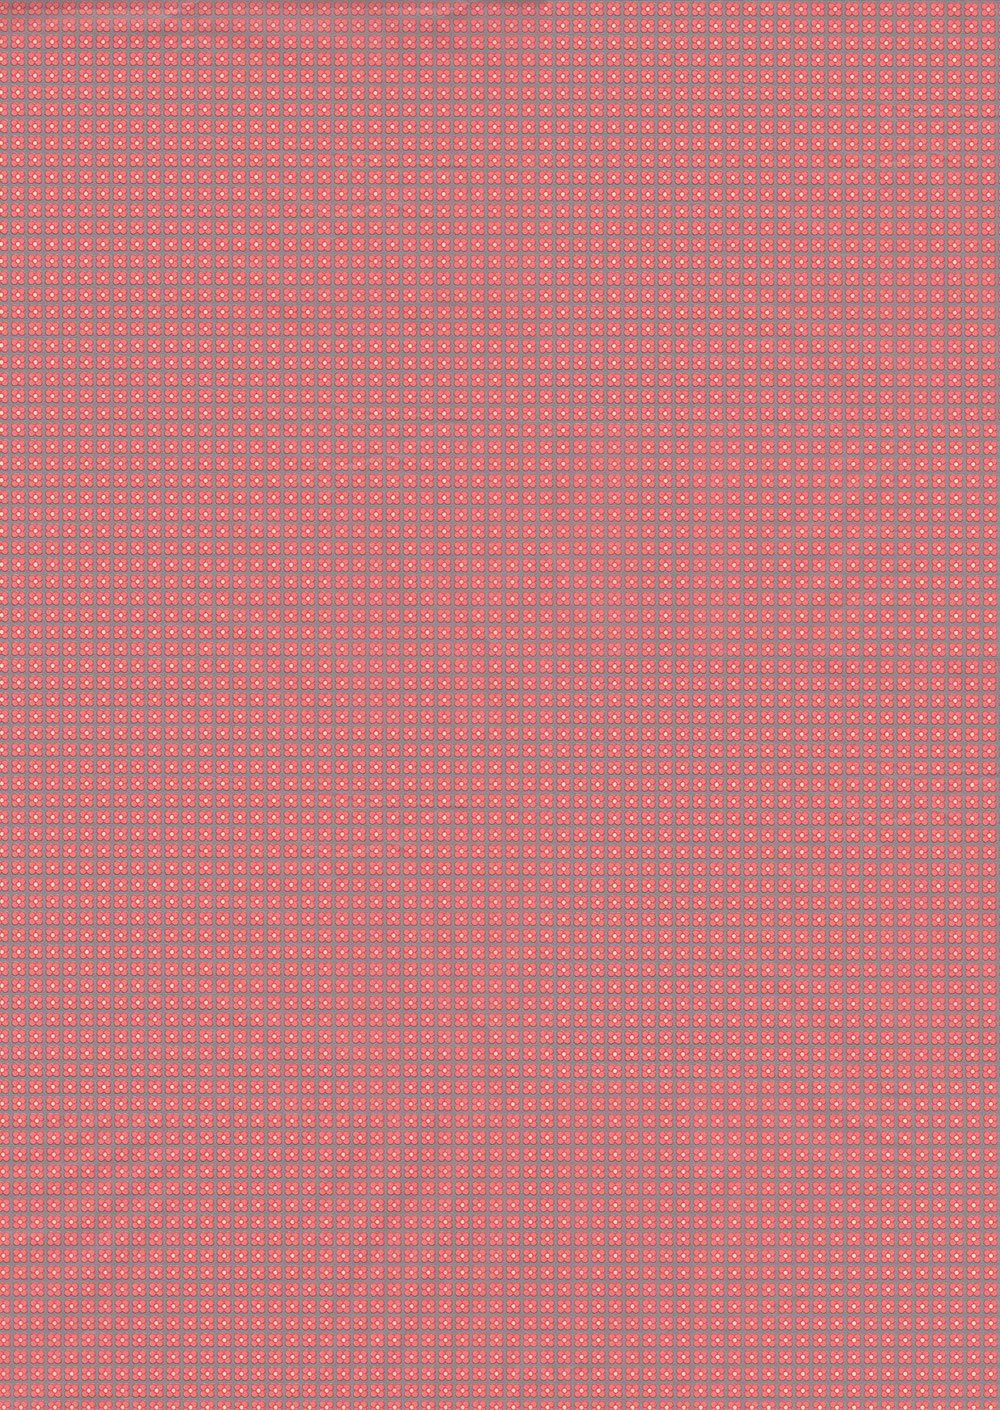 H-Erzmade Zeichenpapier Décopatch-Papier 647 Blümchen klein rosa/grau, 30